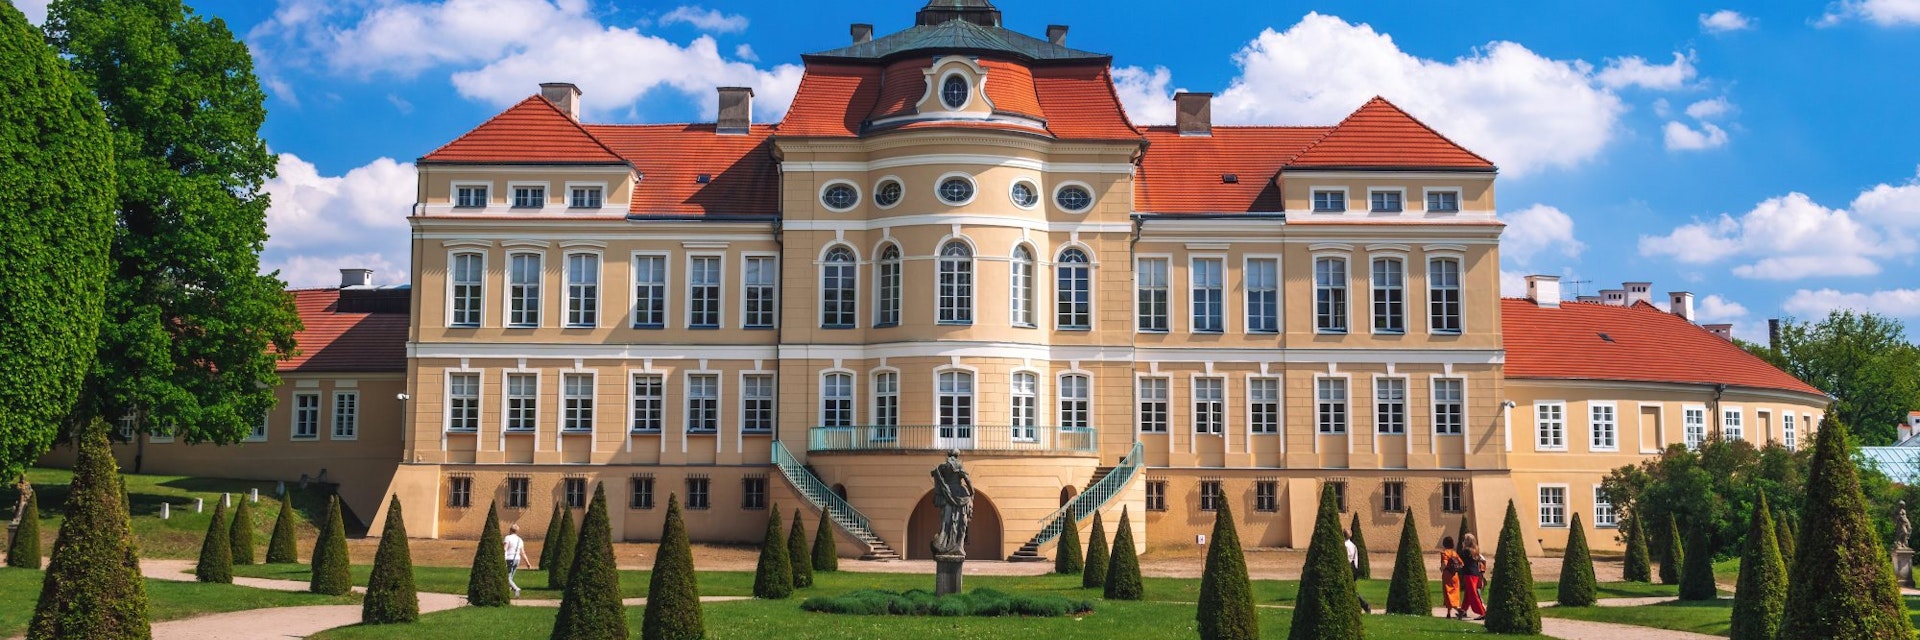 Rogalin, Wielkopolska, Poland - May 2019: Rogalin palace